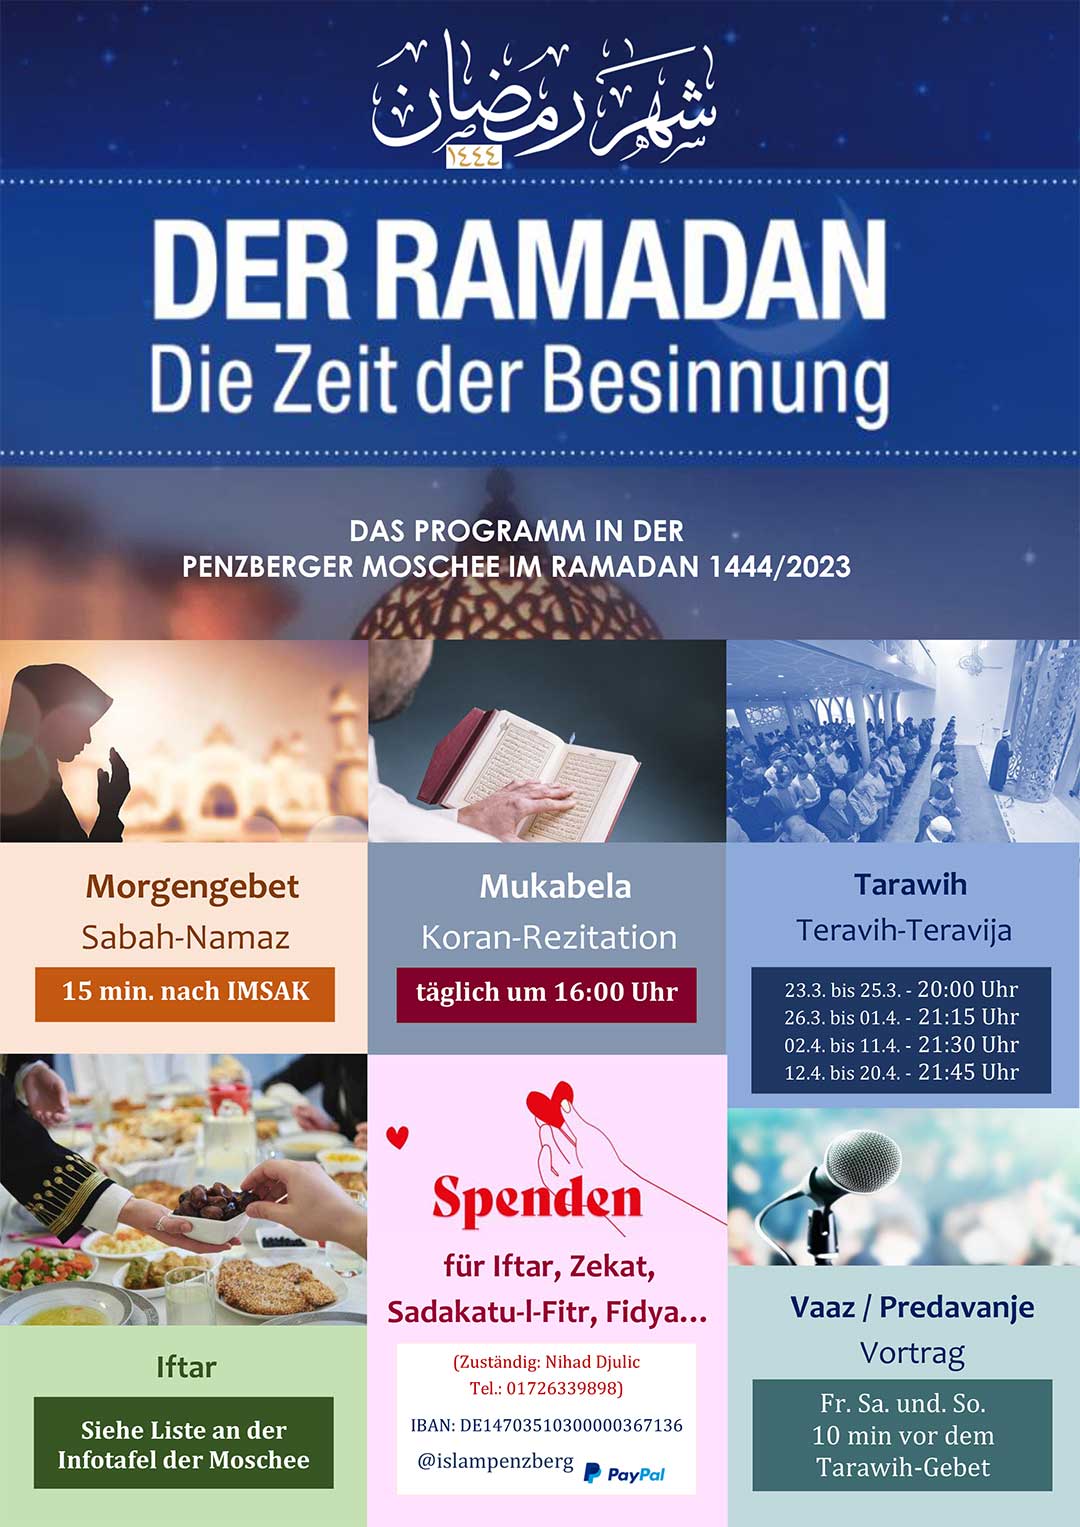 IGP Ramadan-Programm 2023